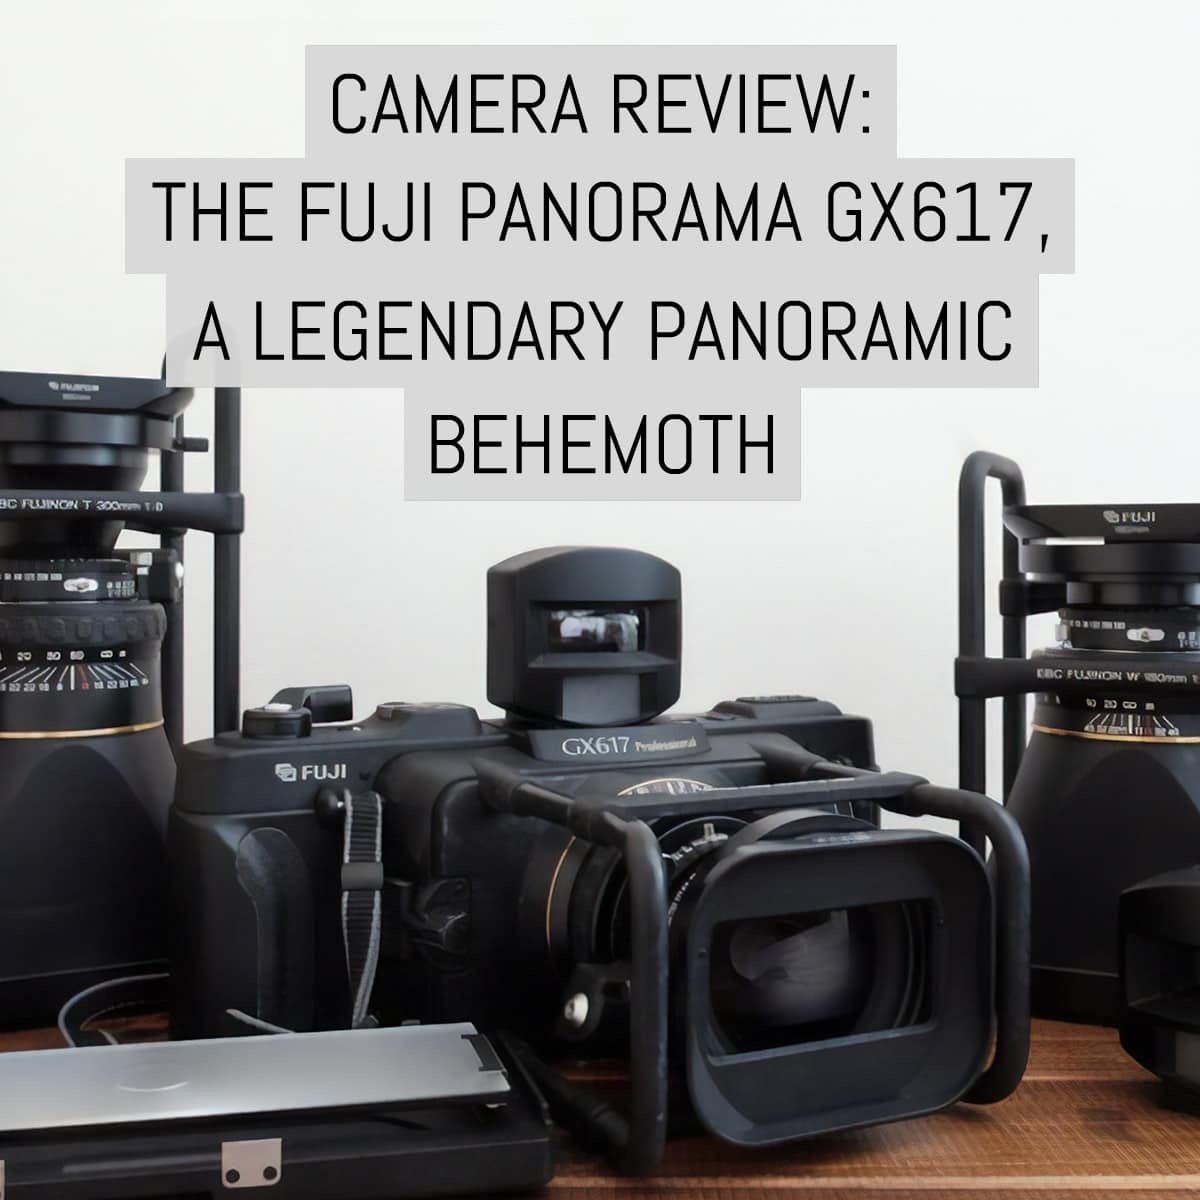 Camera review: the Fuji Panorama GX617, a legendary panoramic behemoth